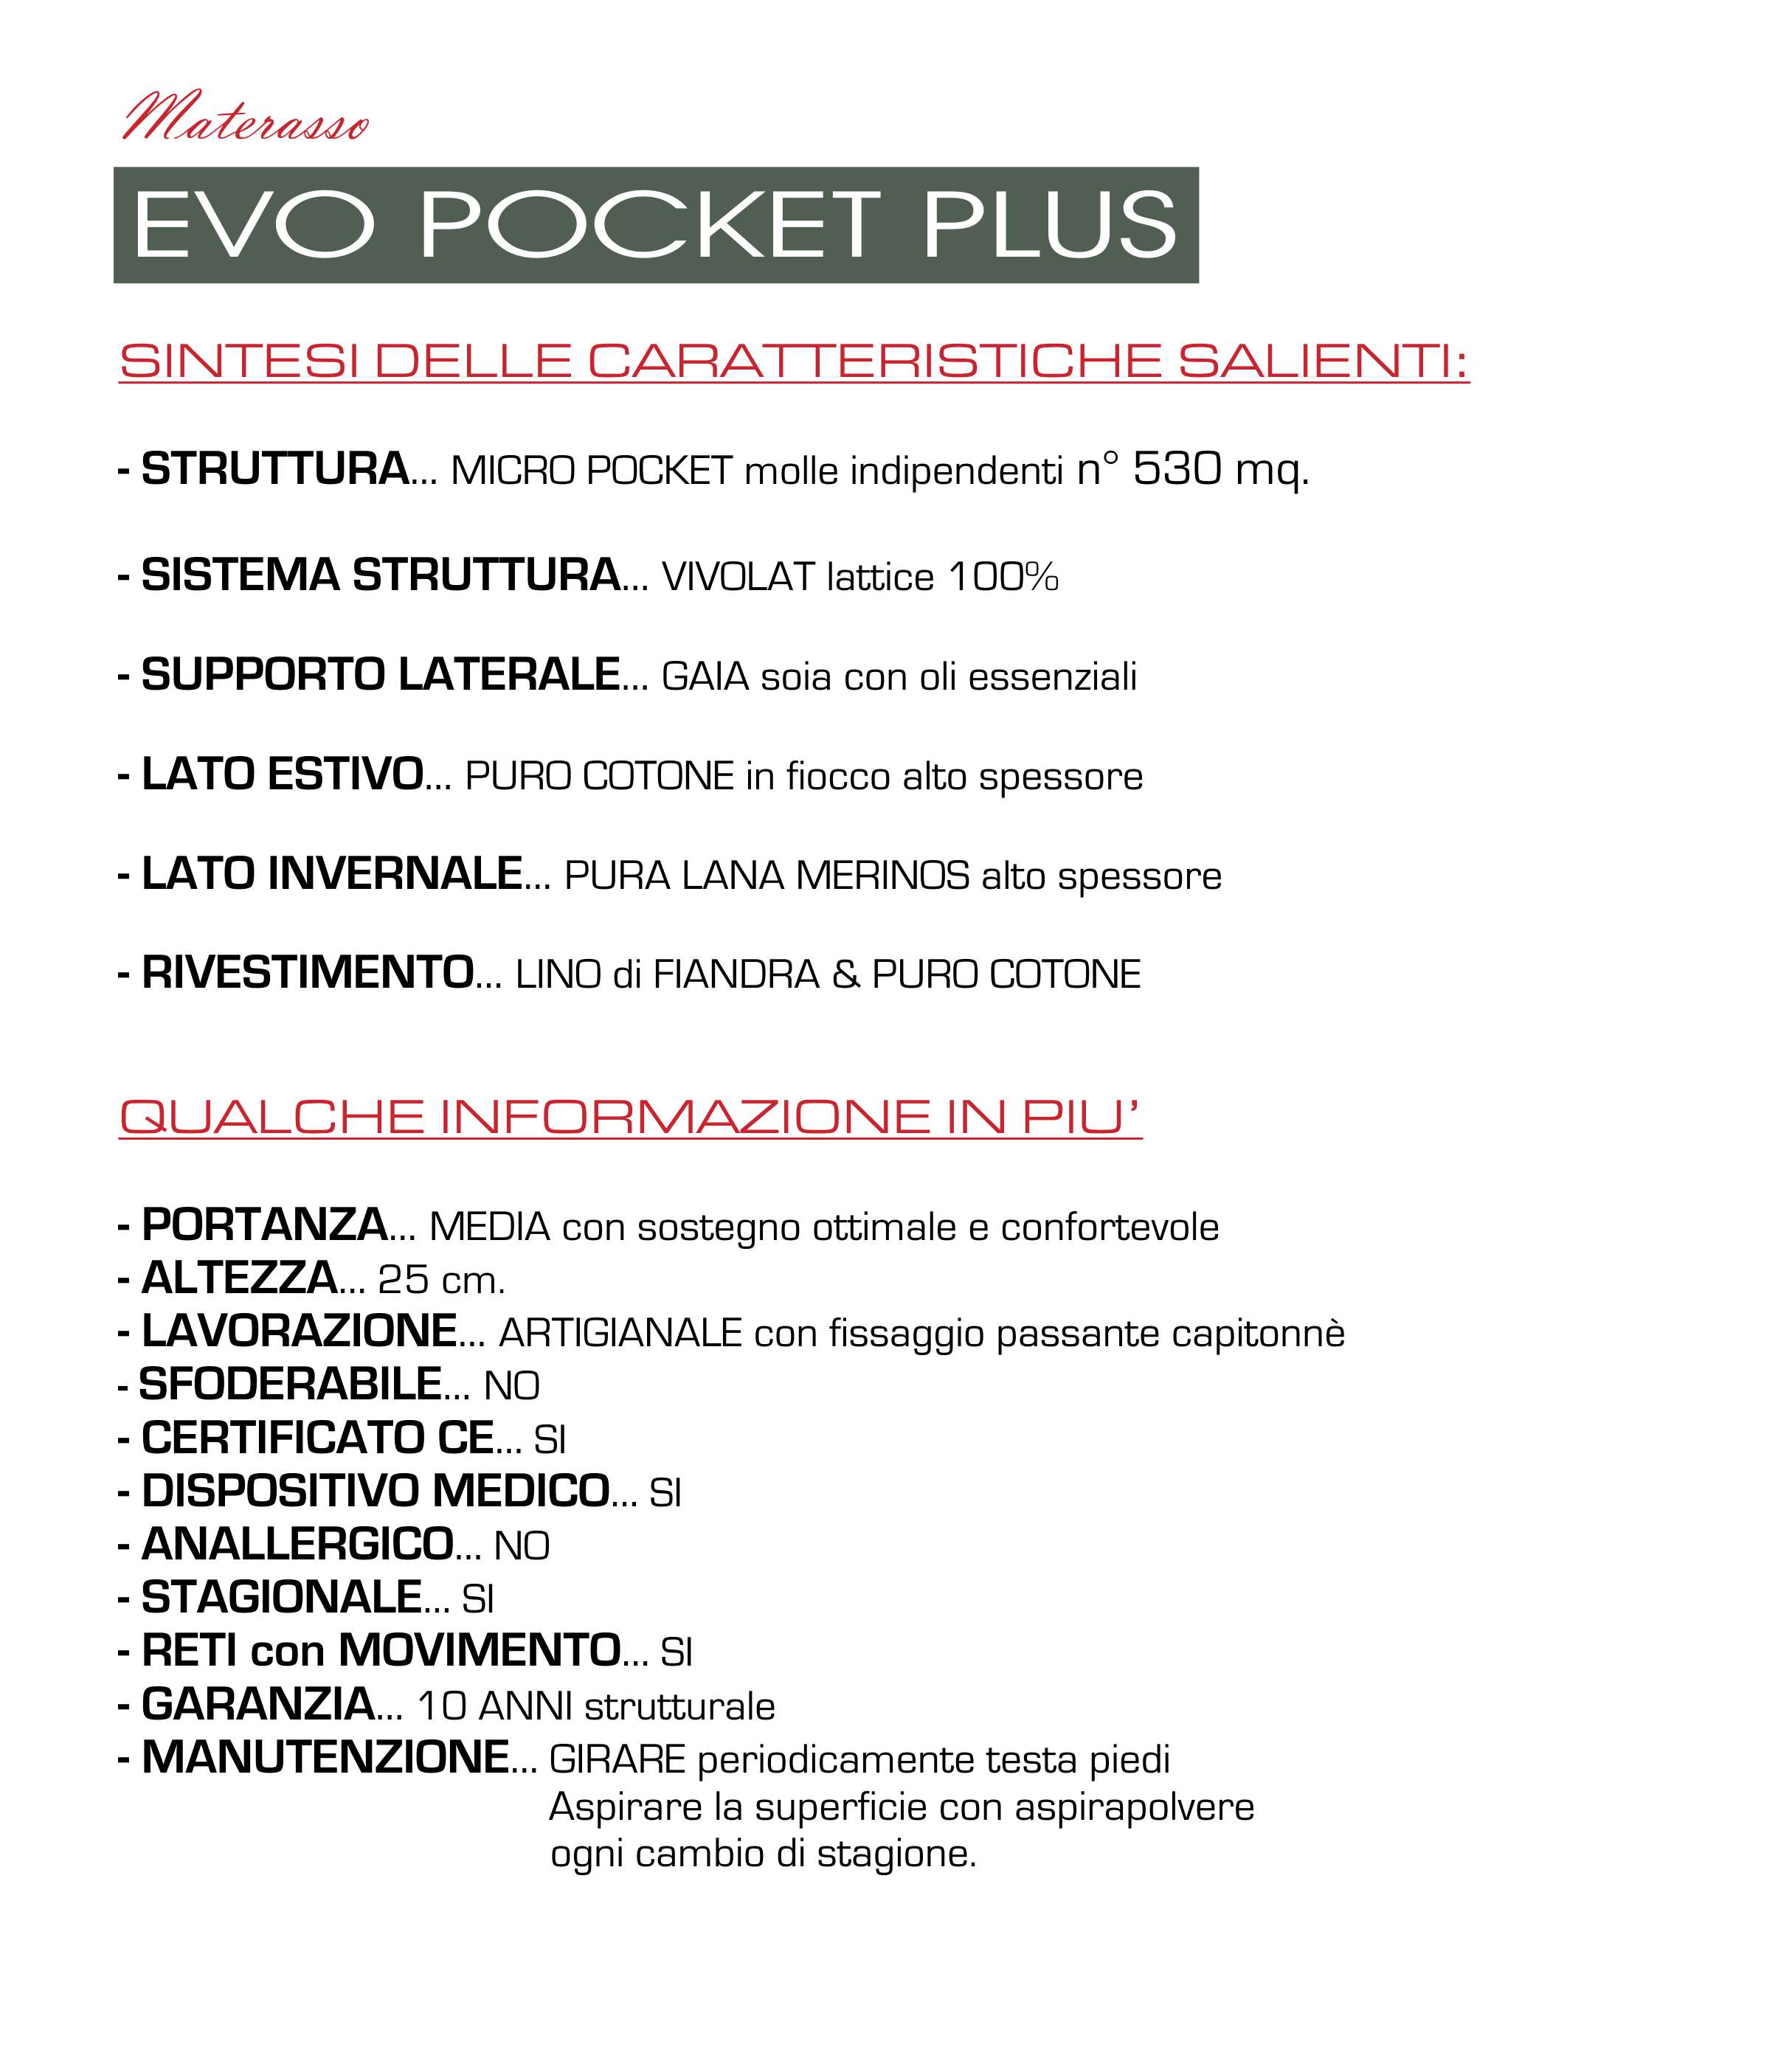 Evo Pocket Plus